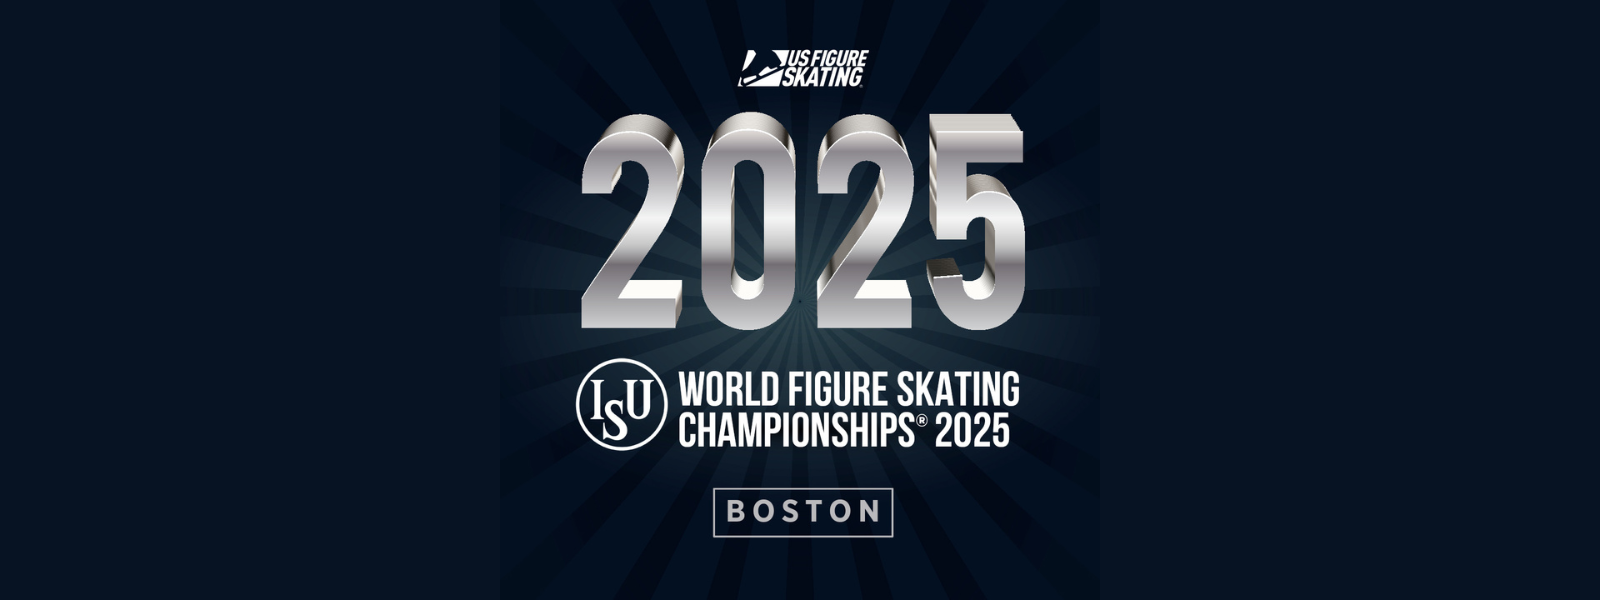 u-s-figure-skating-to-host-isu-world-figure-skating-championships-2025-in-boston-td-garden